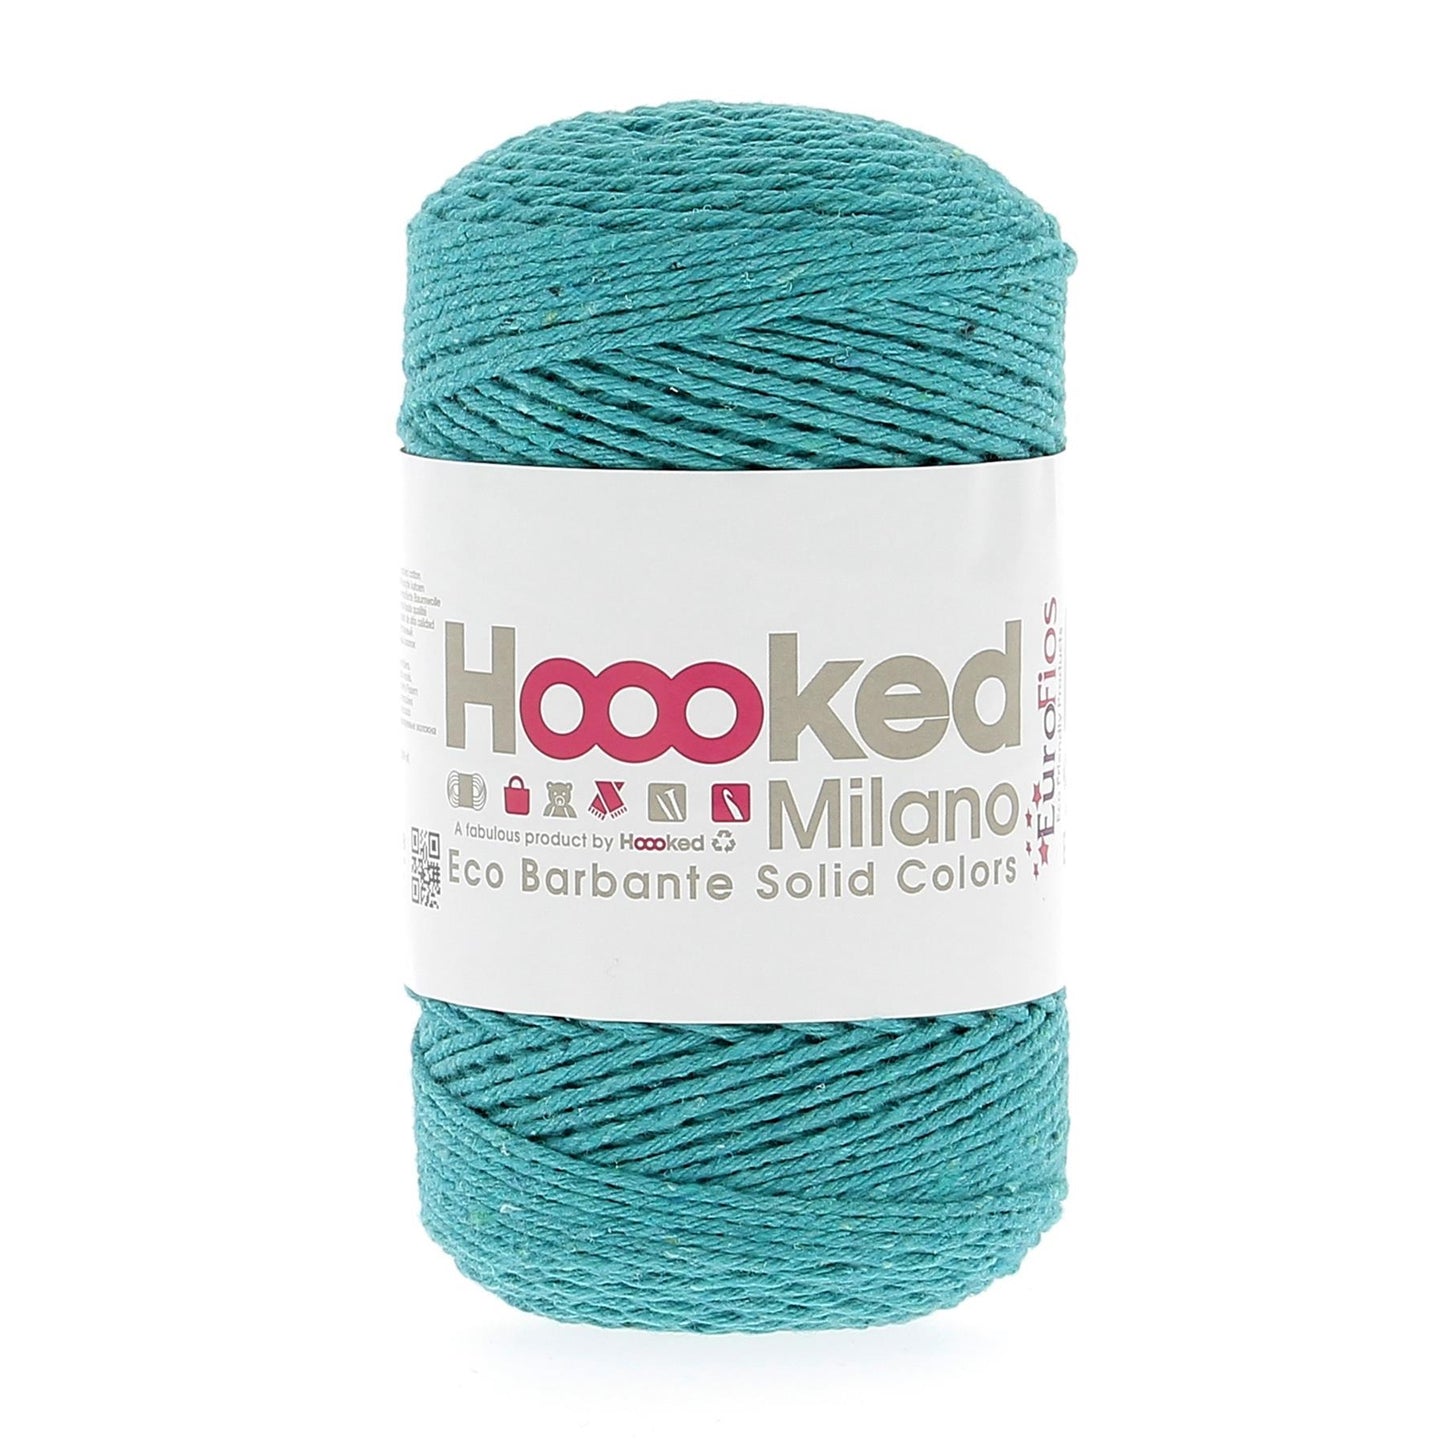 [Hoooked] R810 Eco Barbante Milano Lagoon Cotton Yarn - 204M, 200g